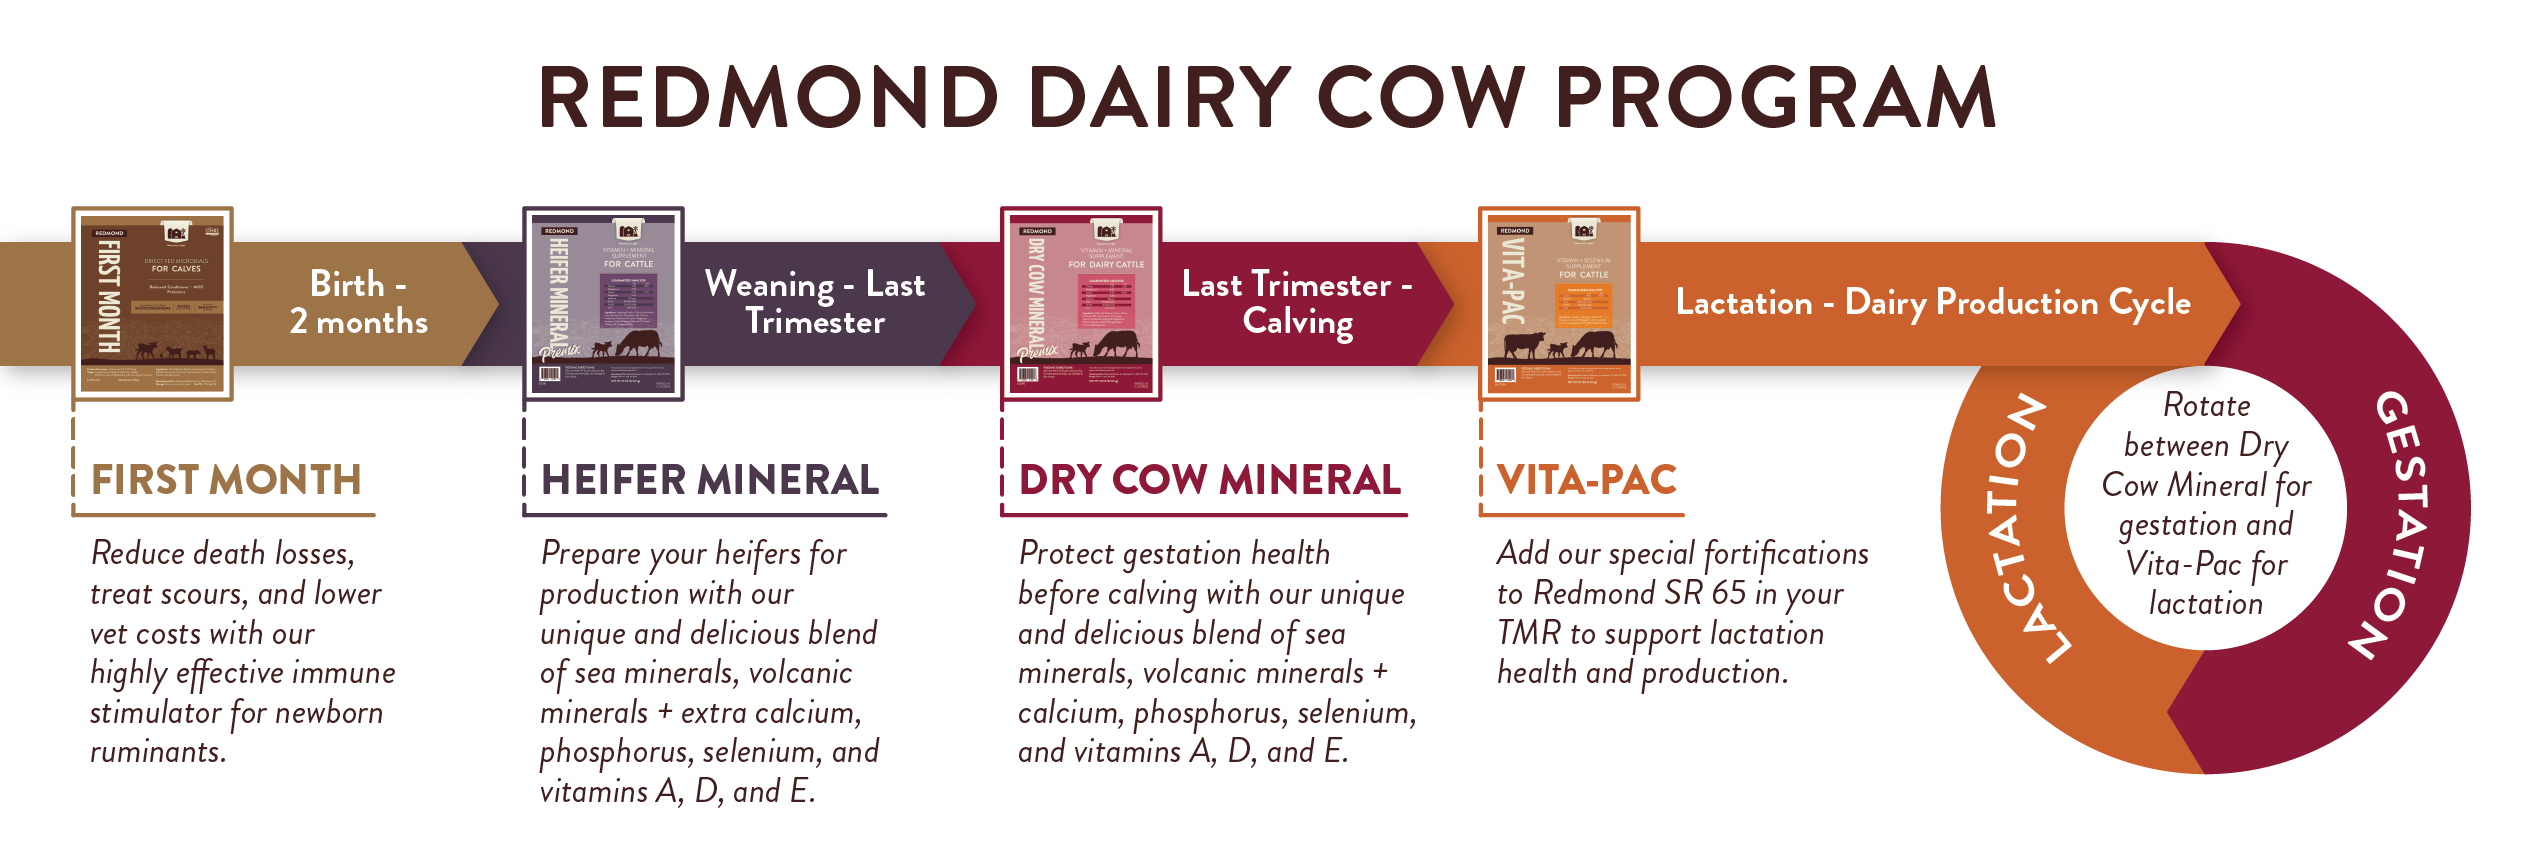 Redmond Dairy Cow Program